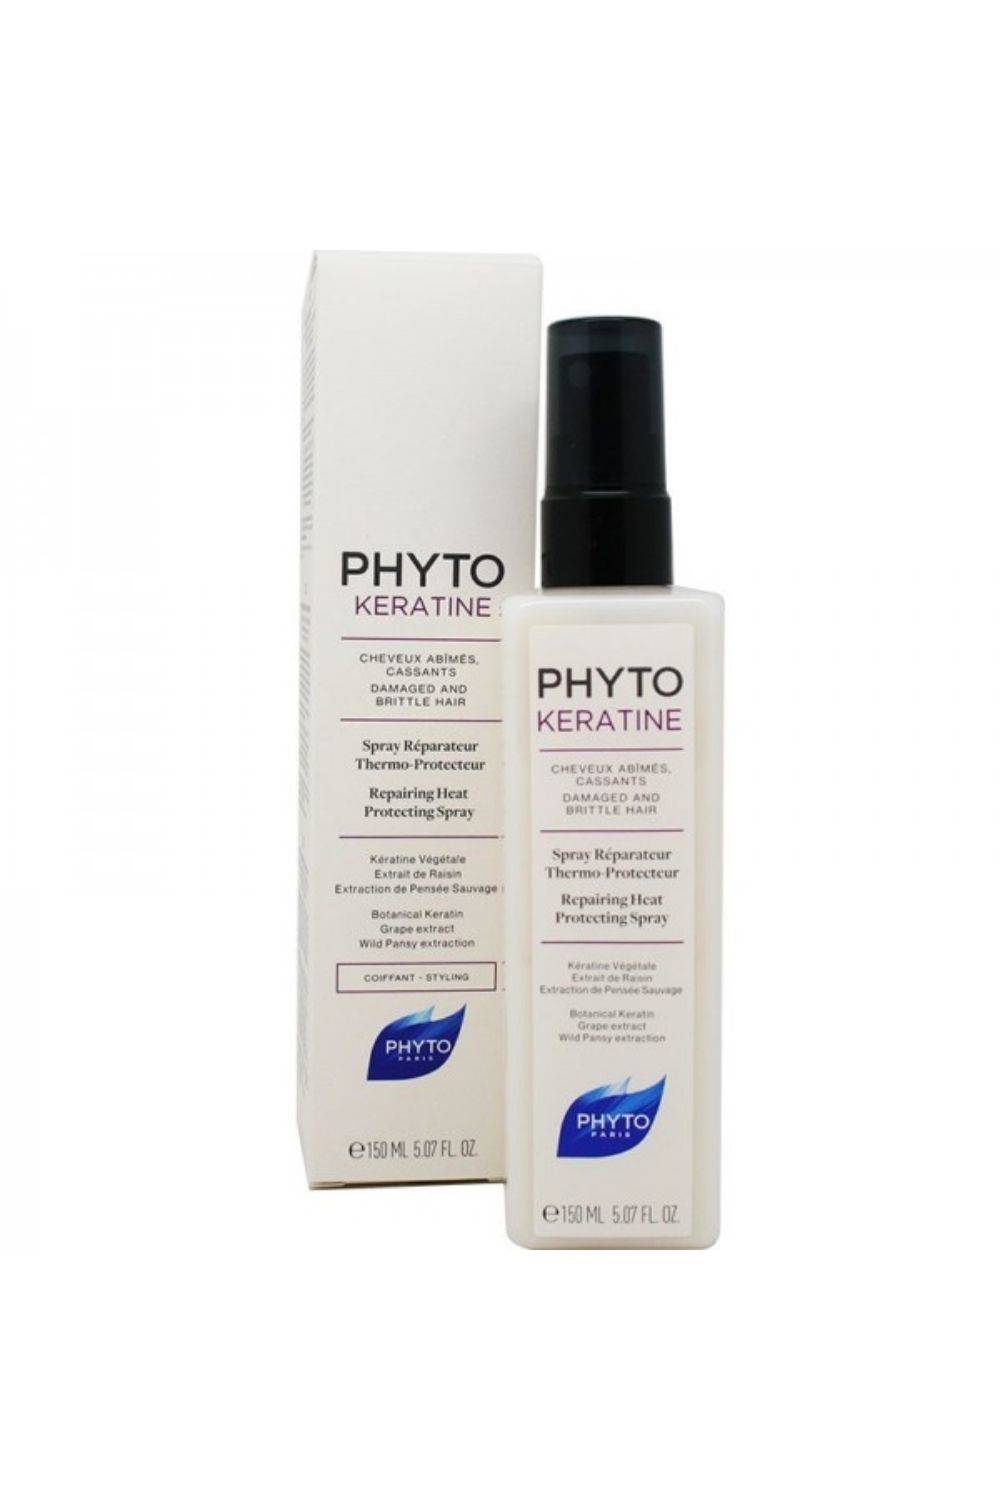 Phytokeratine Spray de Phyto